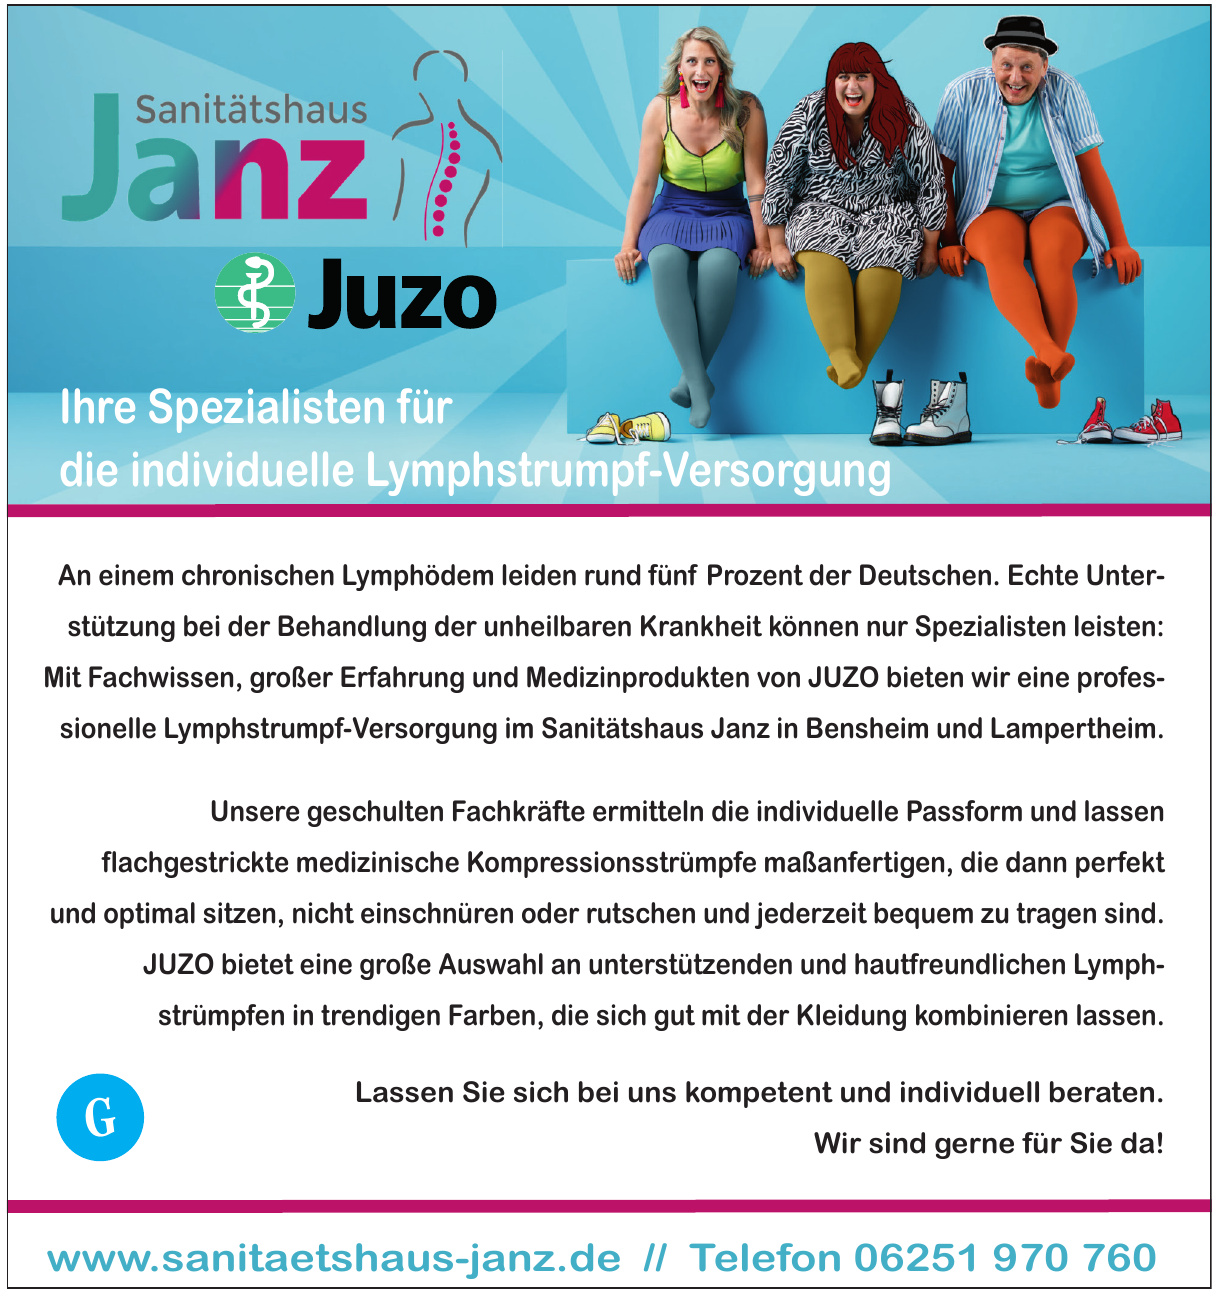 Sanitätshaus Janz Juzo